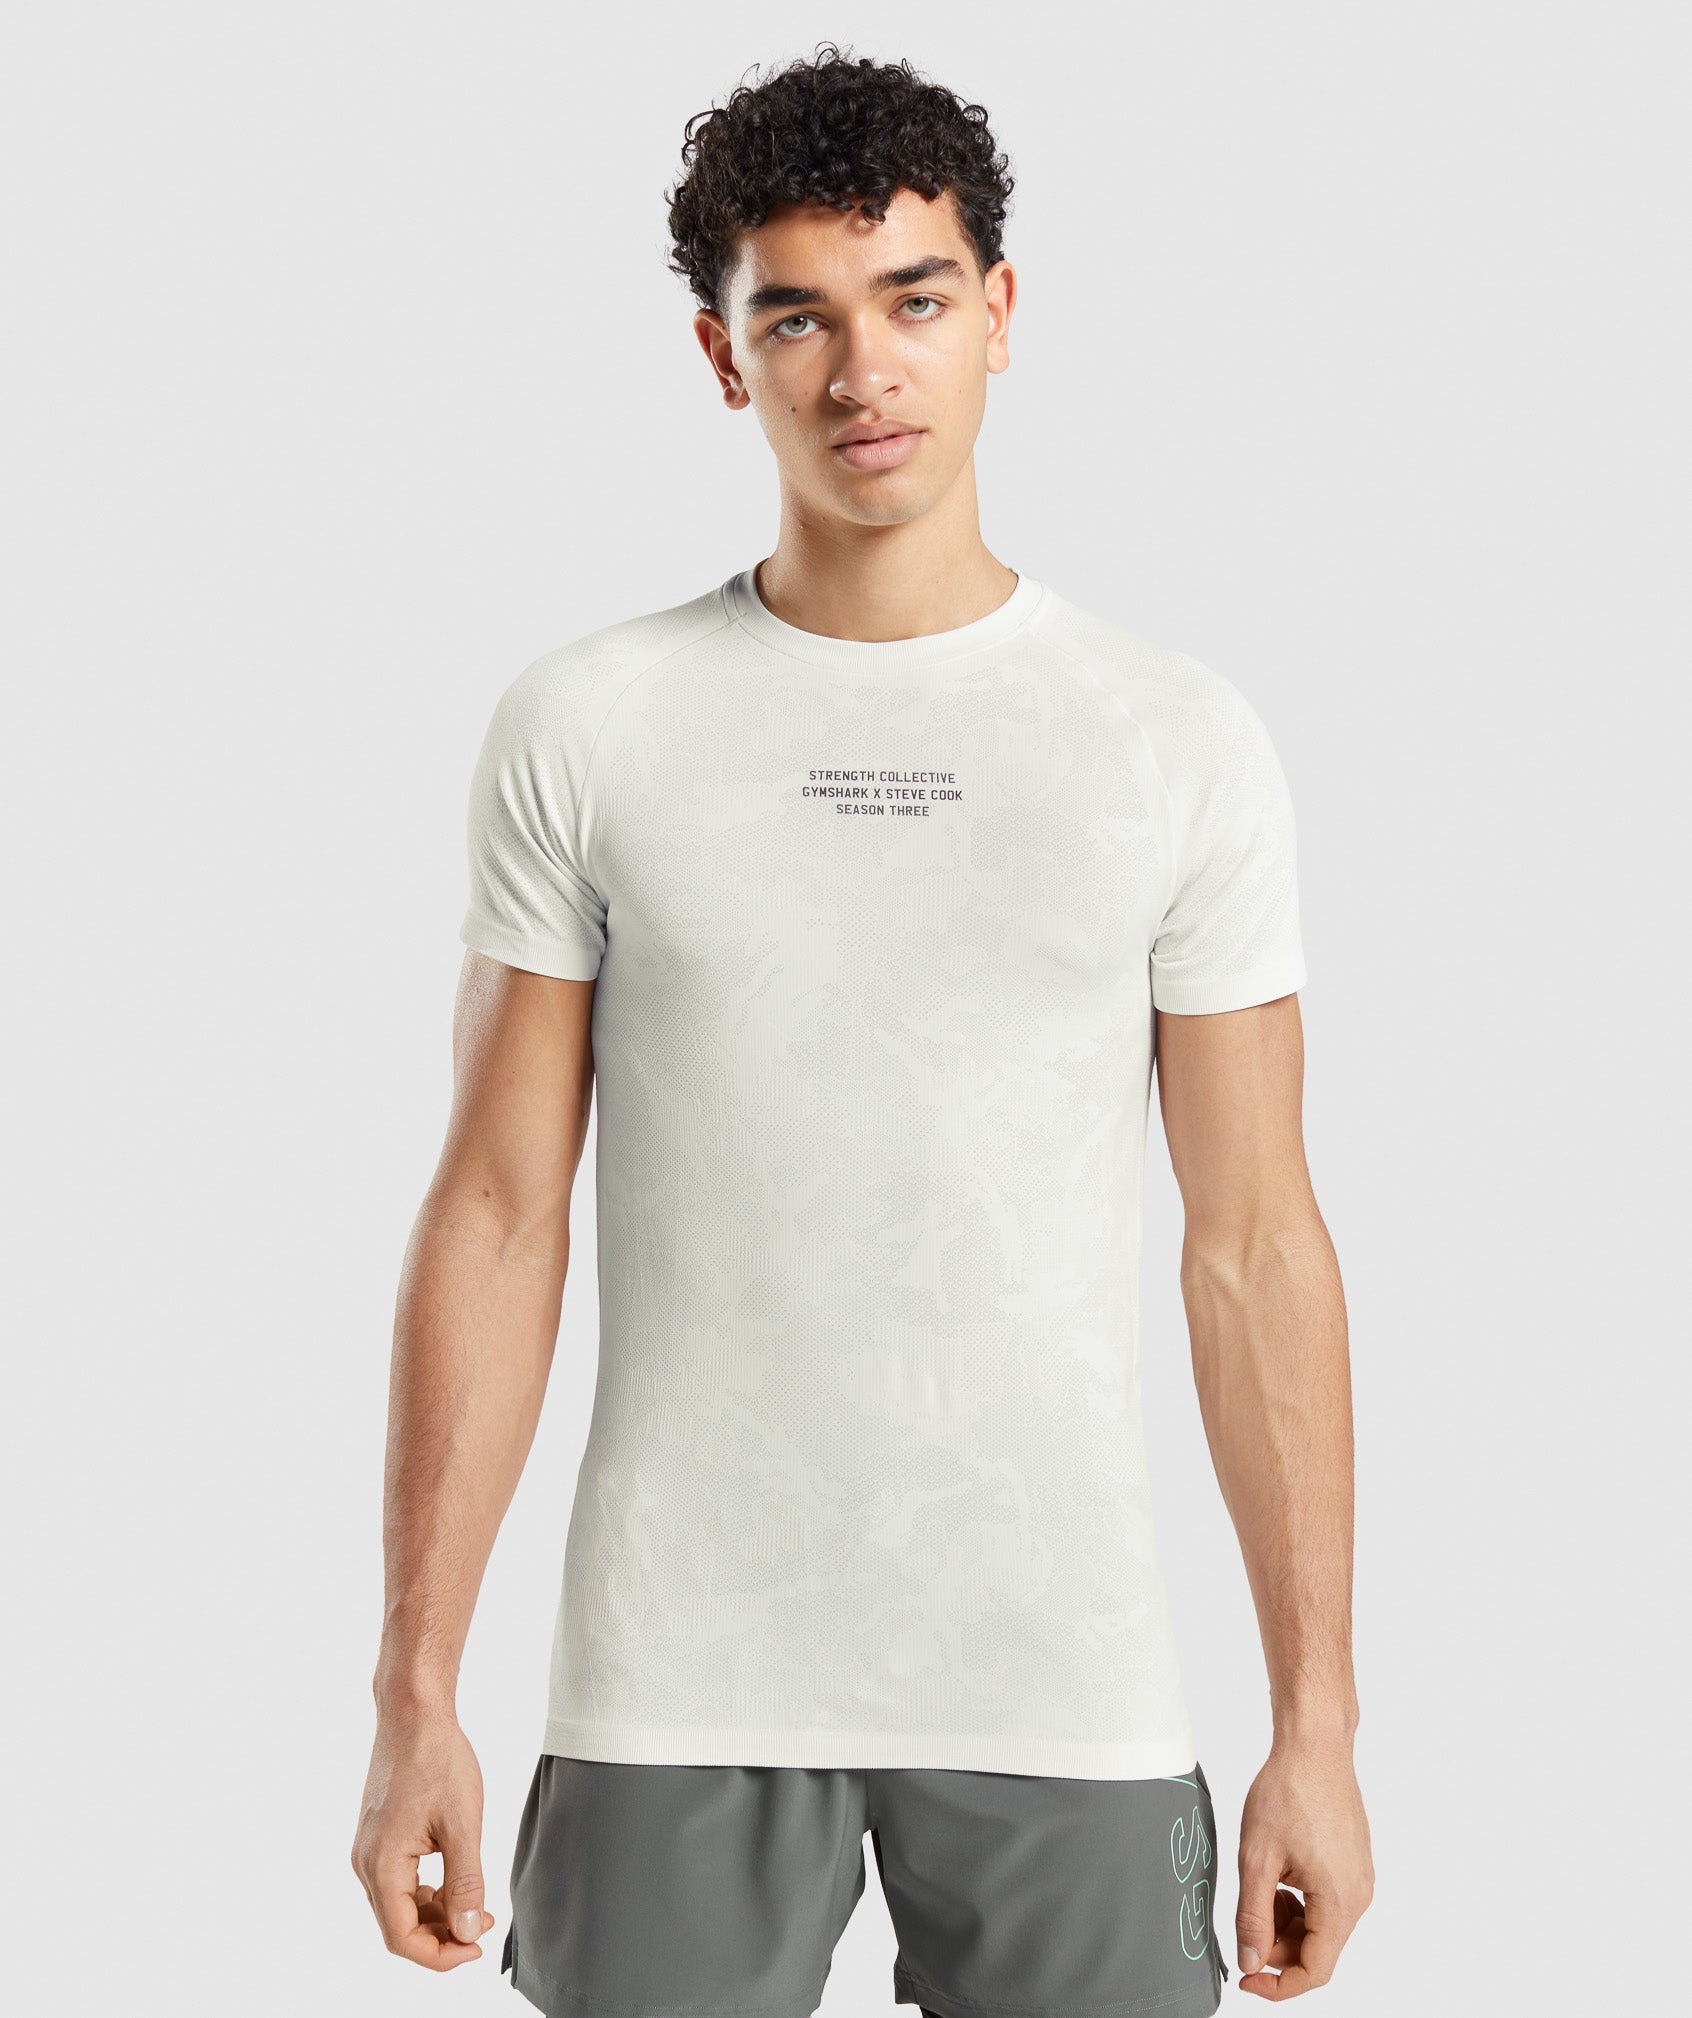 Gymshark//Steve Cook Seamless T-Shirt in Off White/Light Grey - view 1